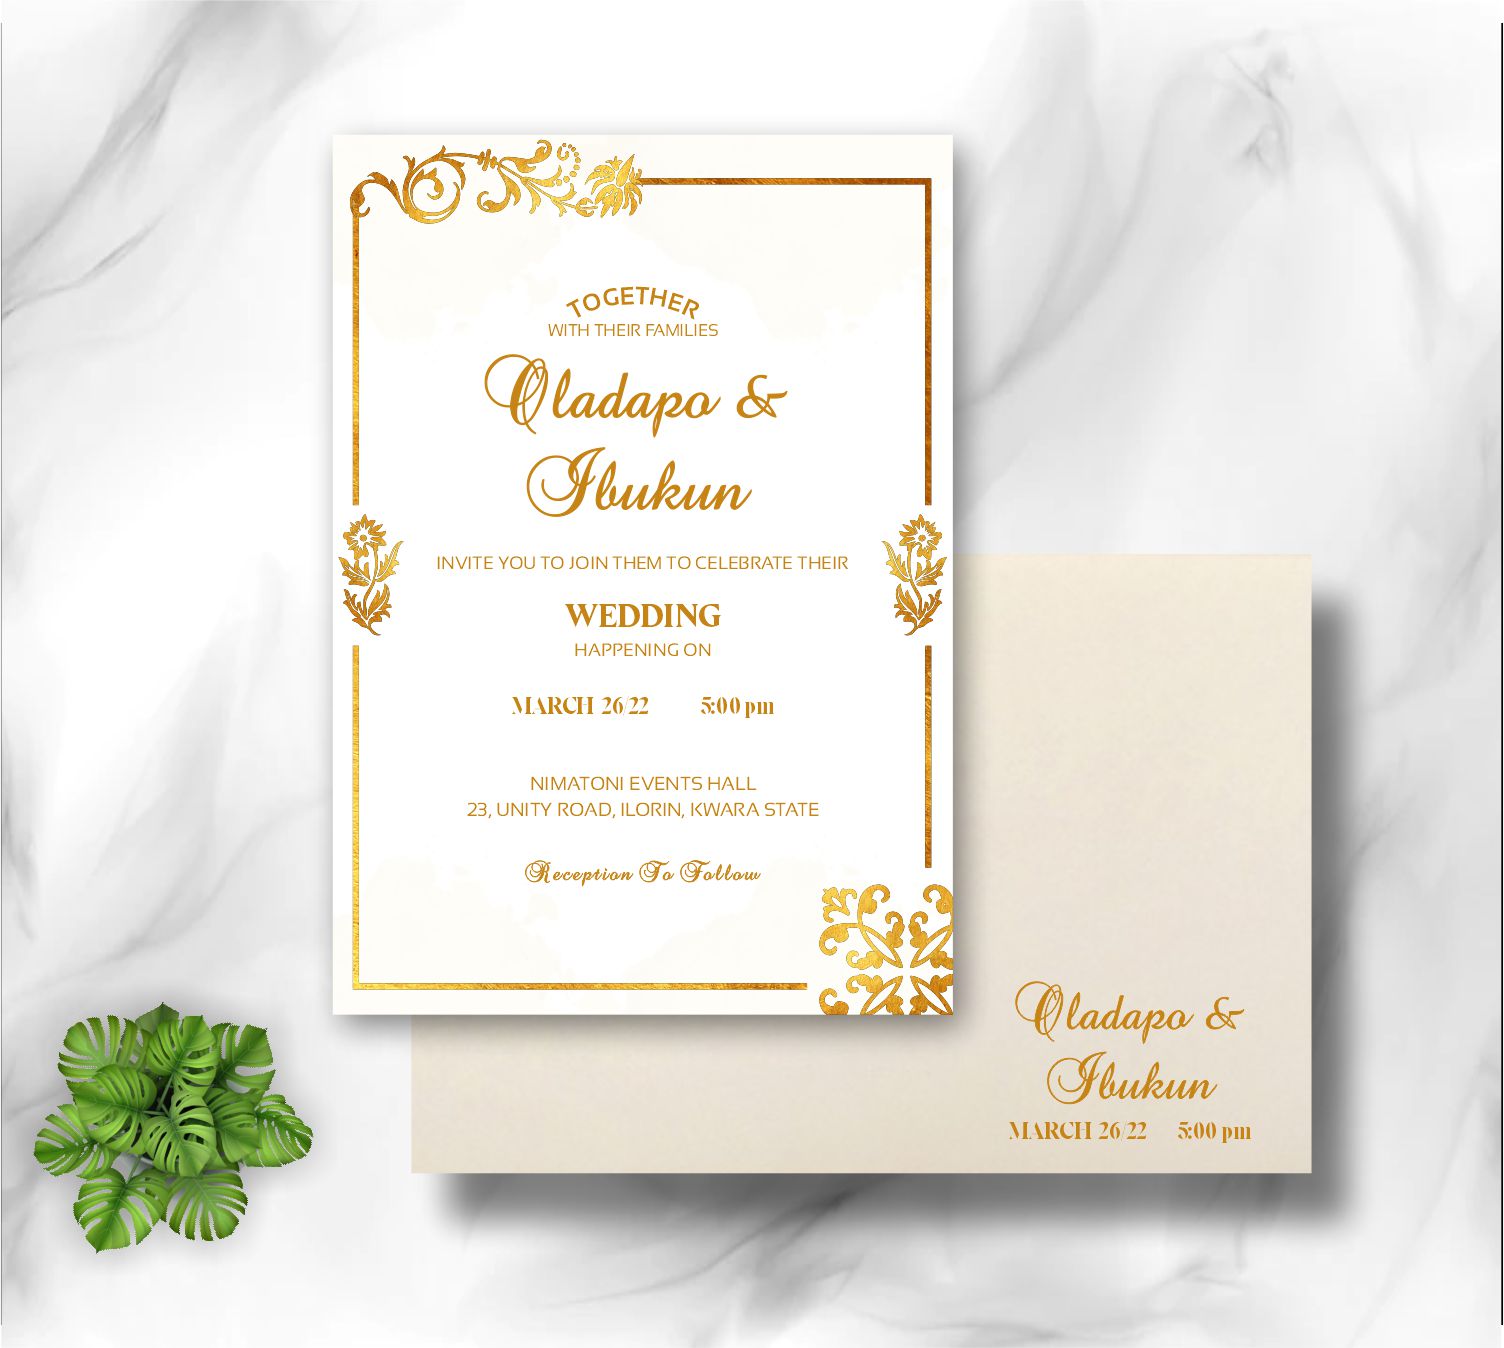 How To Make A Invitation Card | lupon.gov.ph